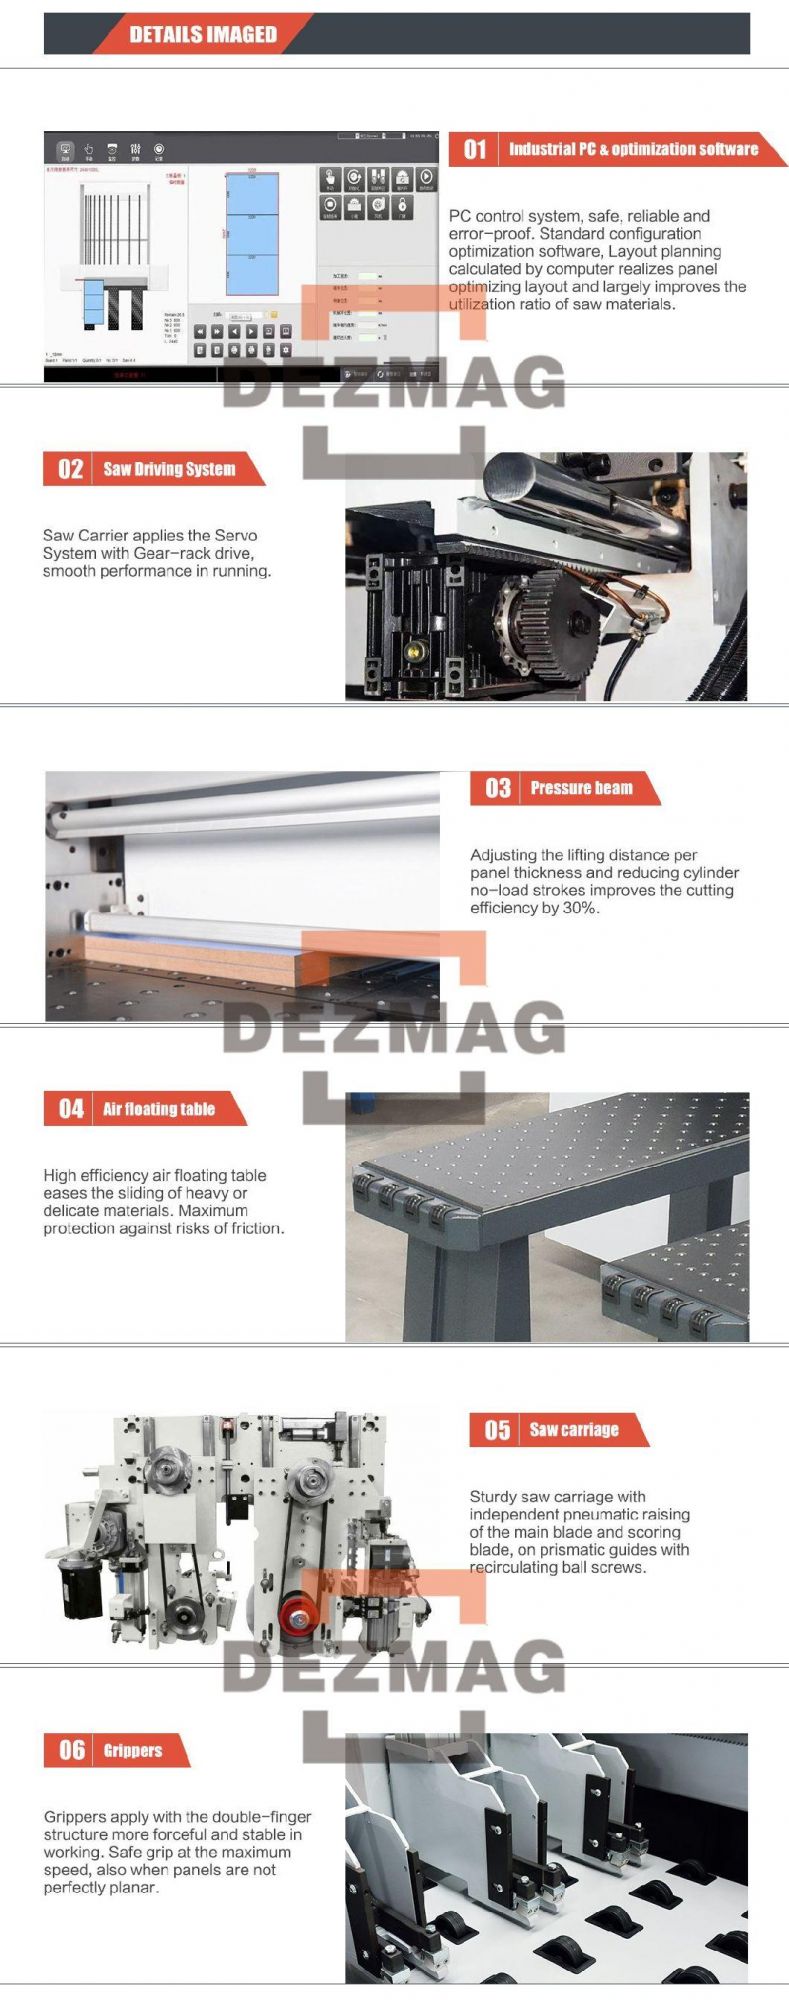 Woodworking Industrial CNC Beam Saw Machine CNC Panel Saw Dps828 Dezmag